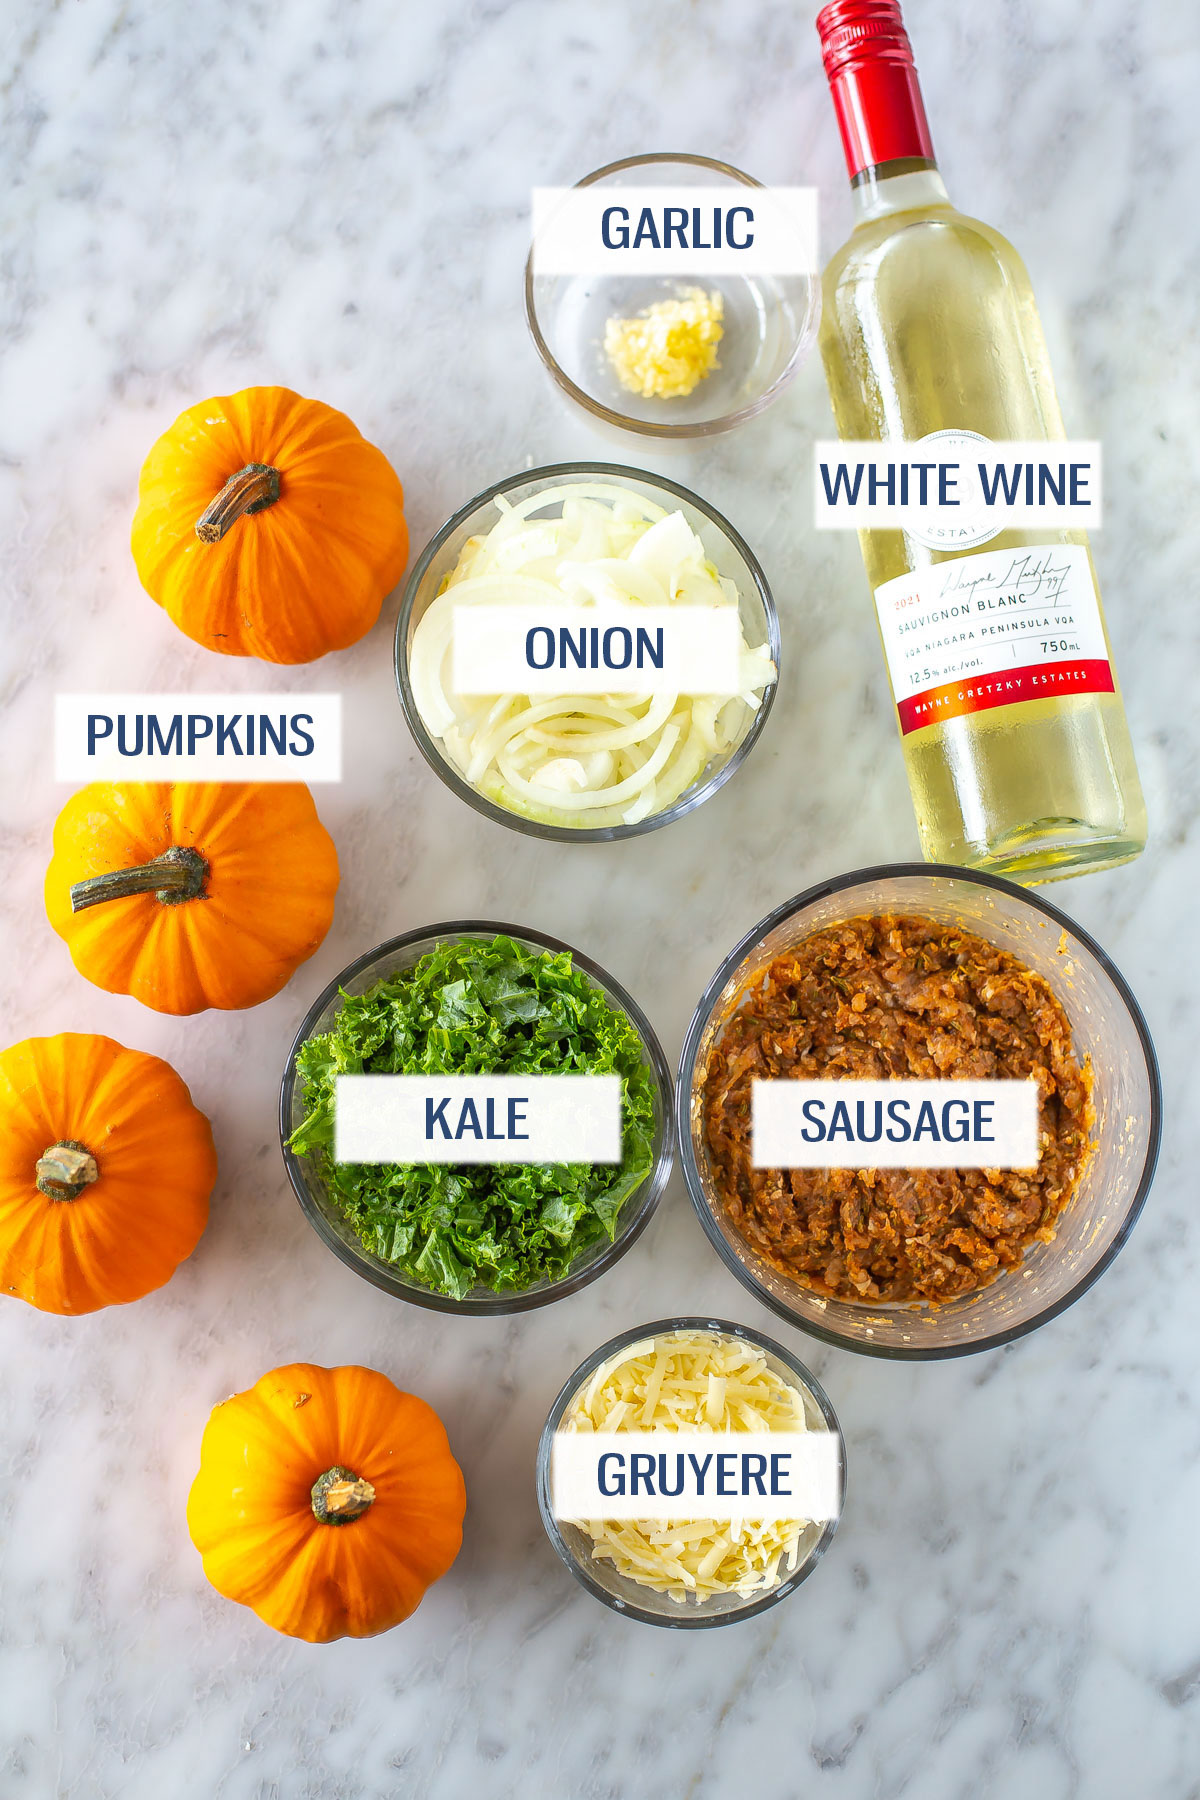 Ingredients for stuffed pumpkins: mini pumpkins, onion, garlic, white wine,  kale, turkey sausage, and gruyere cheese.